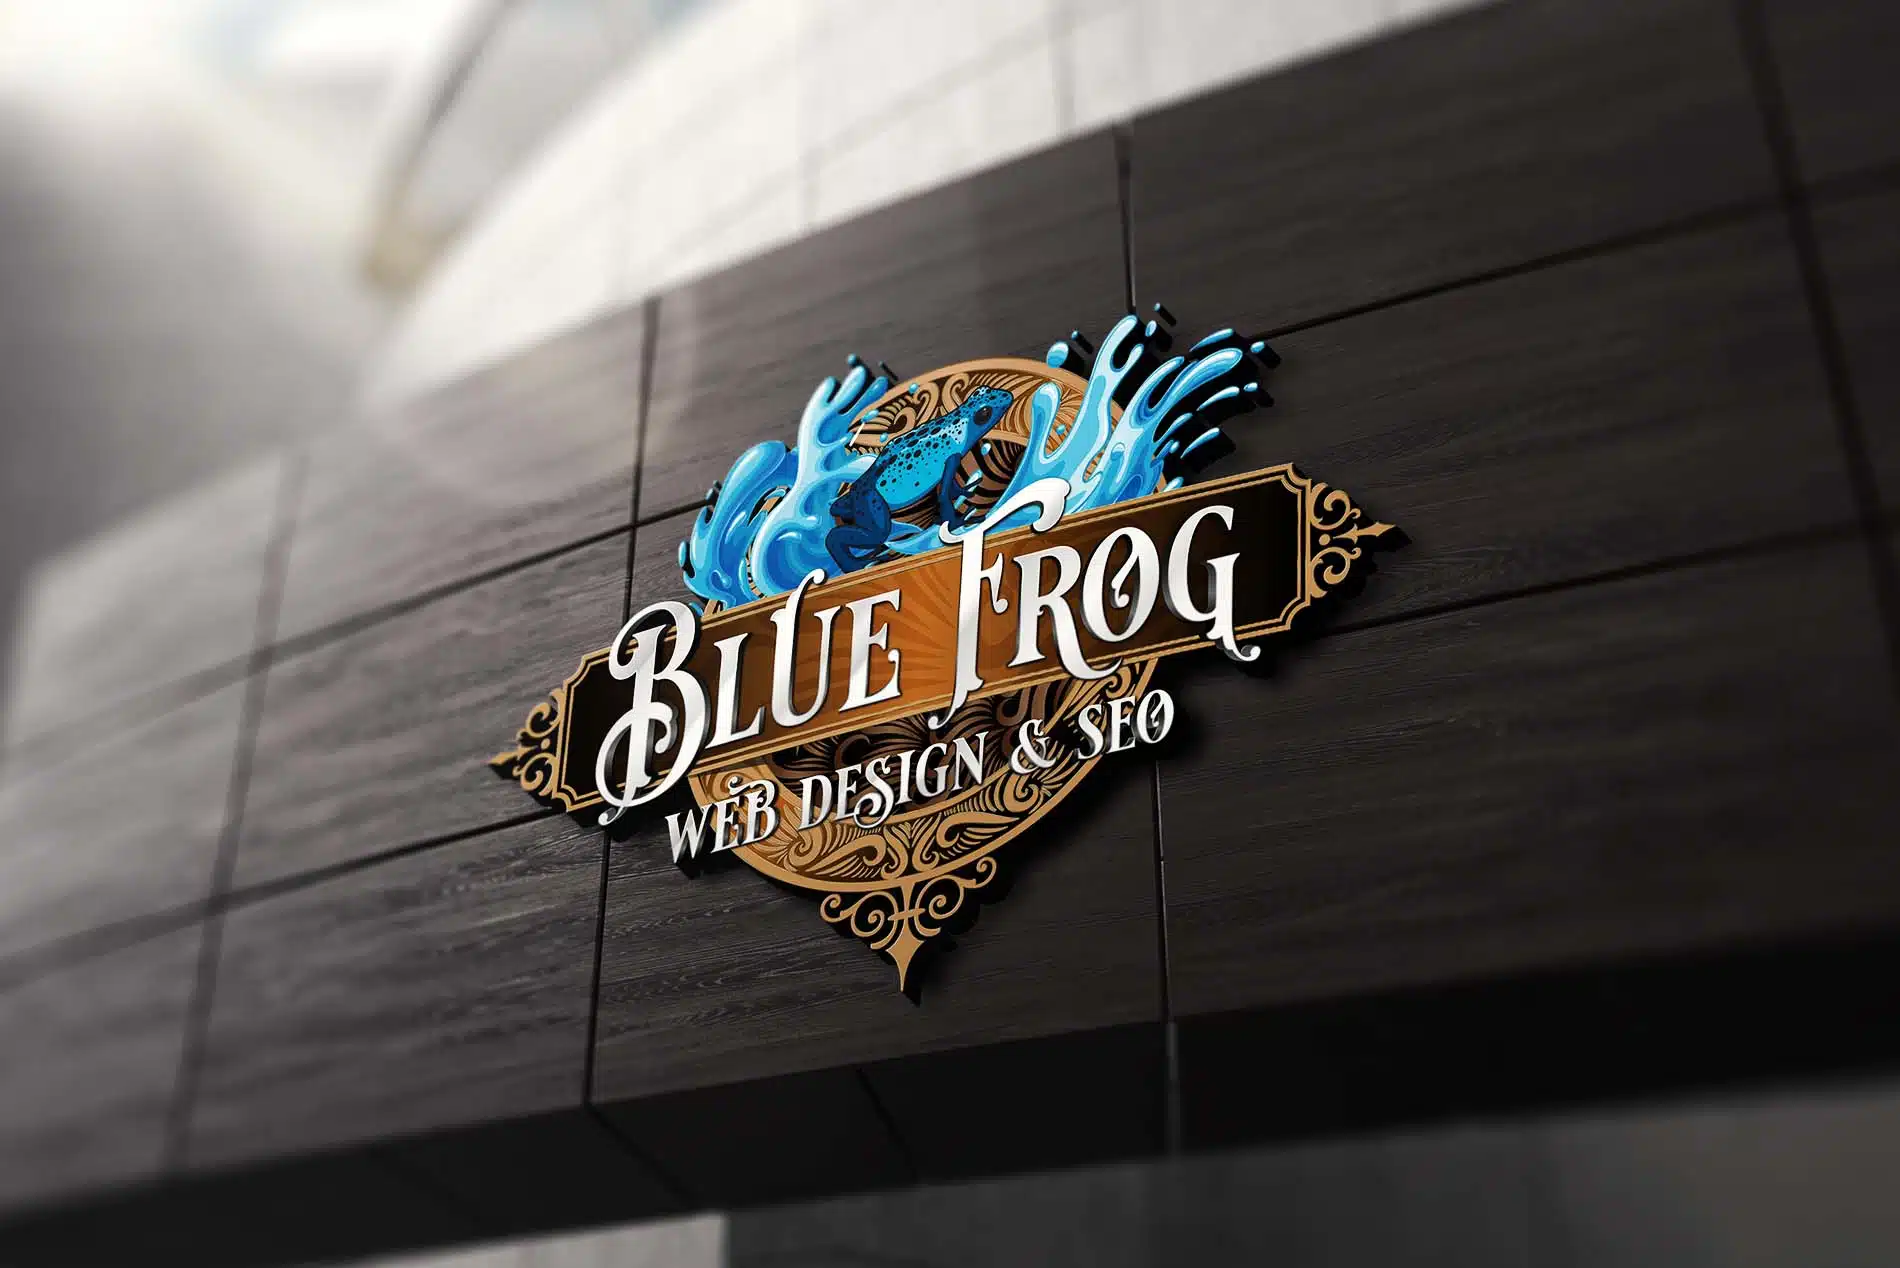 Cookie Policy - Blue Frog Web Design & SEO - Blue Frog Web Design LLC